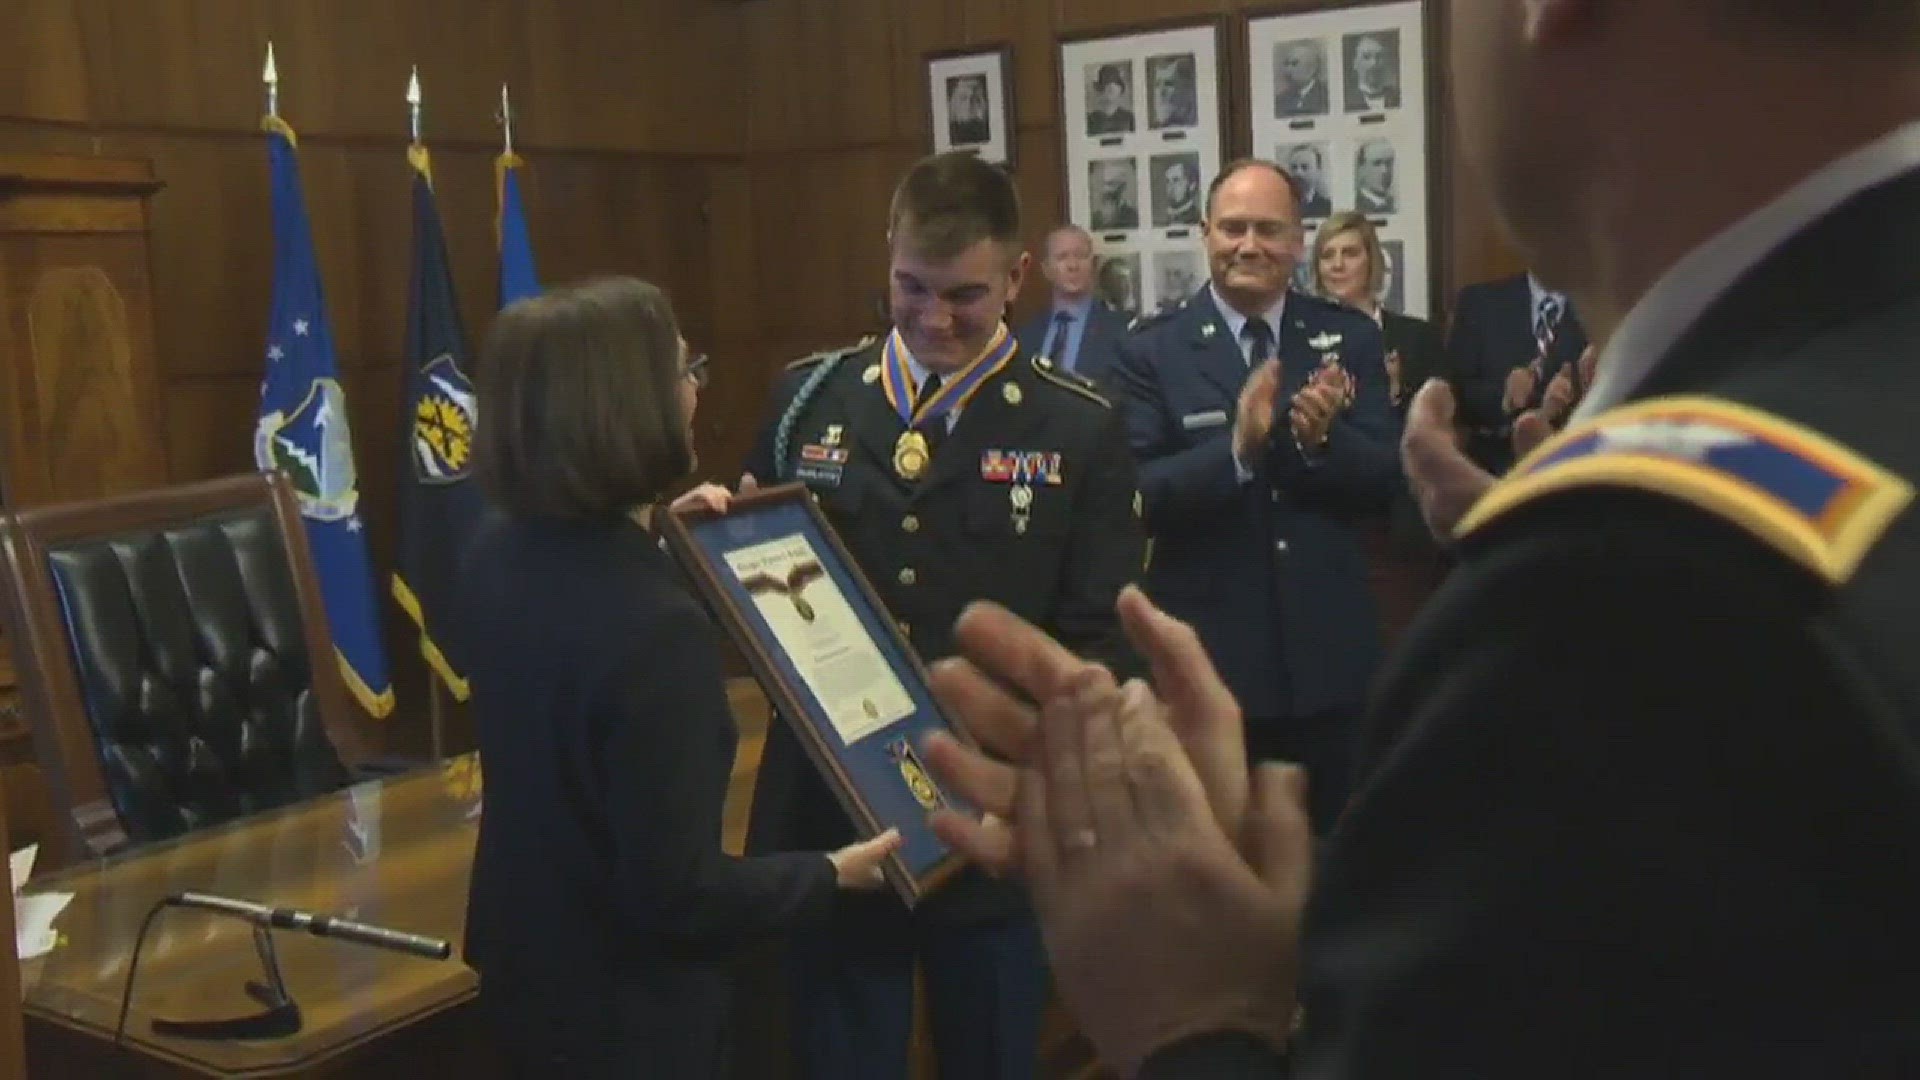 Train hero gets Distinguished Service Medal